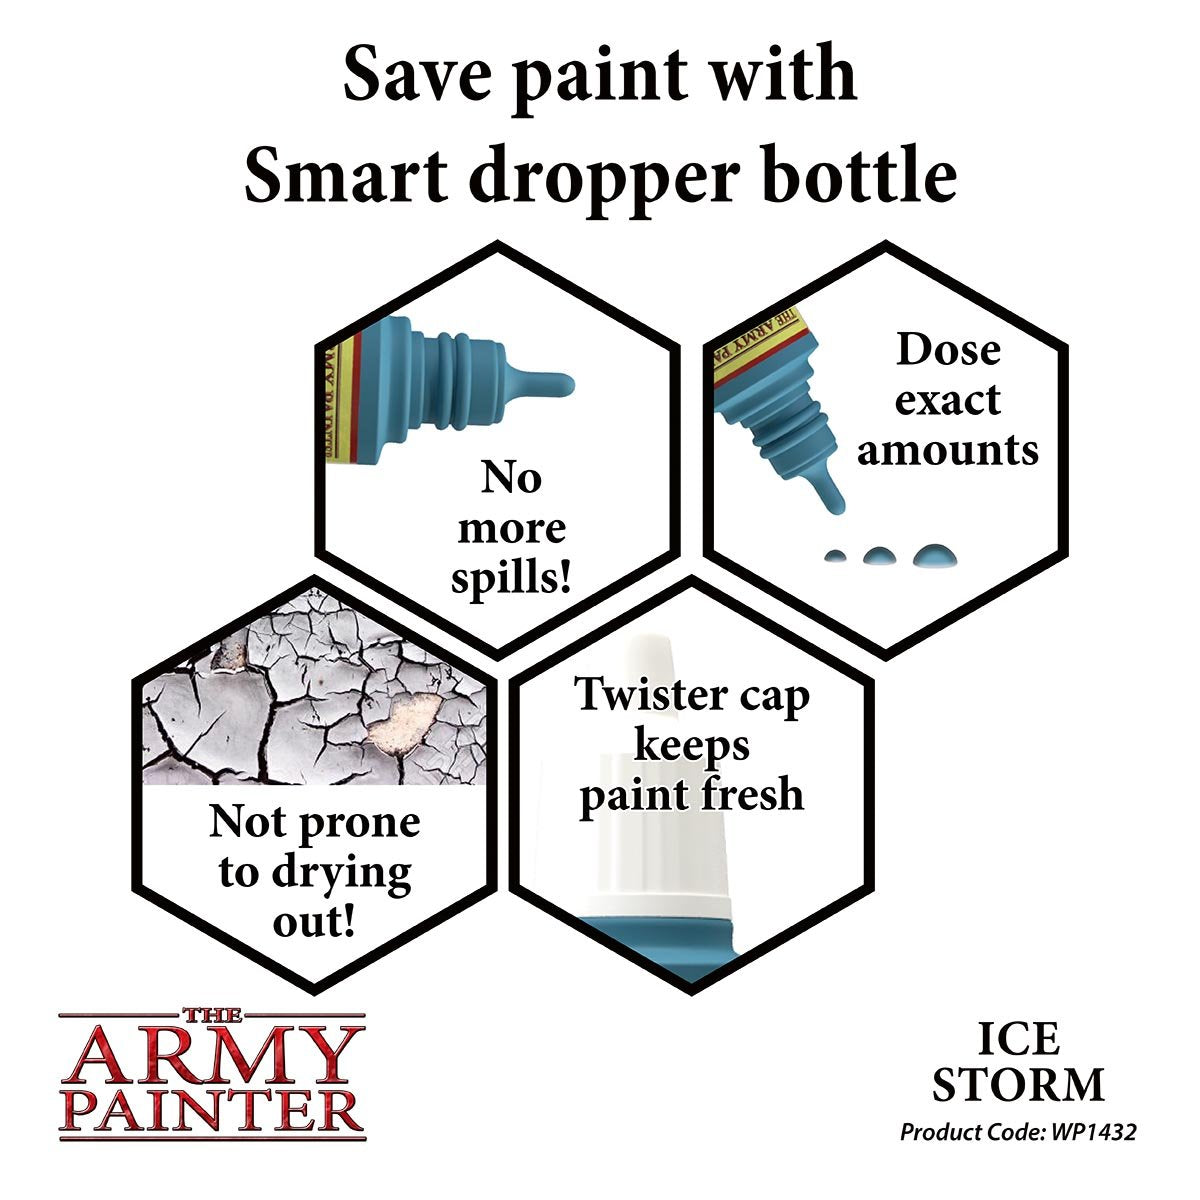 The Army Painter Warpaints WP1432 Ice Storm Acrylic Paint 18ml bottle